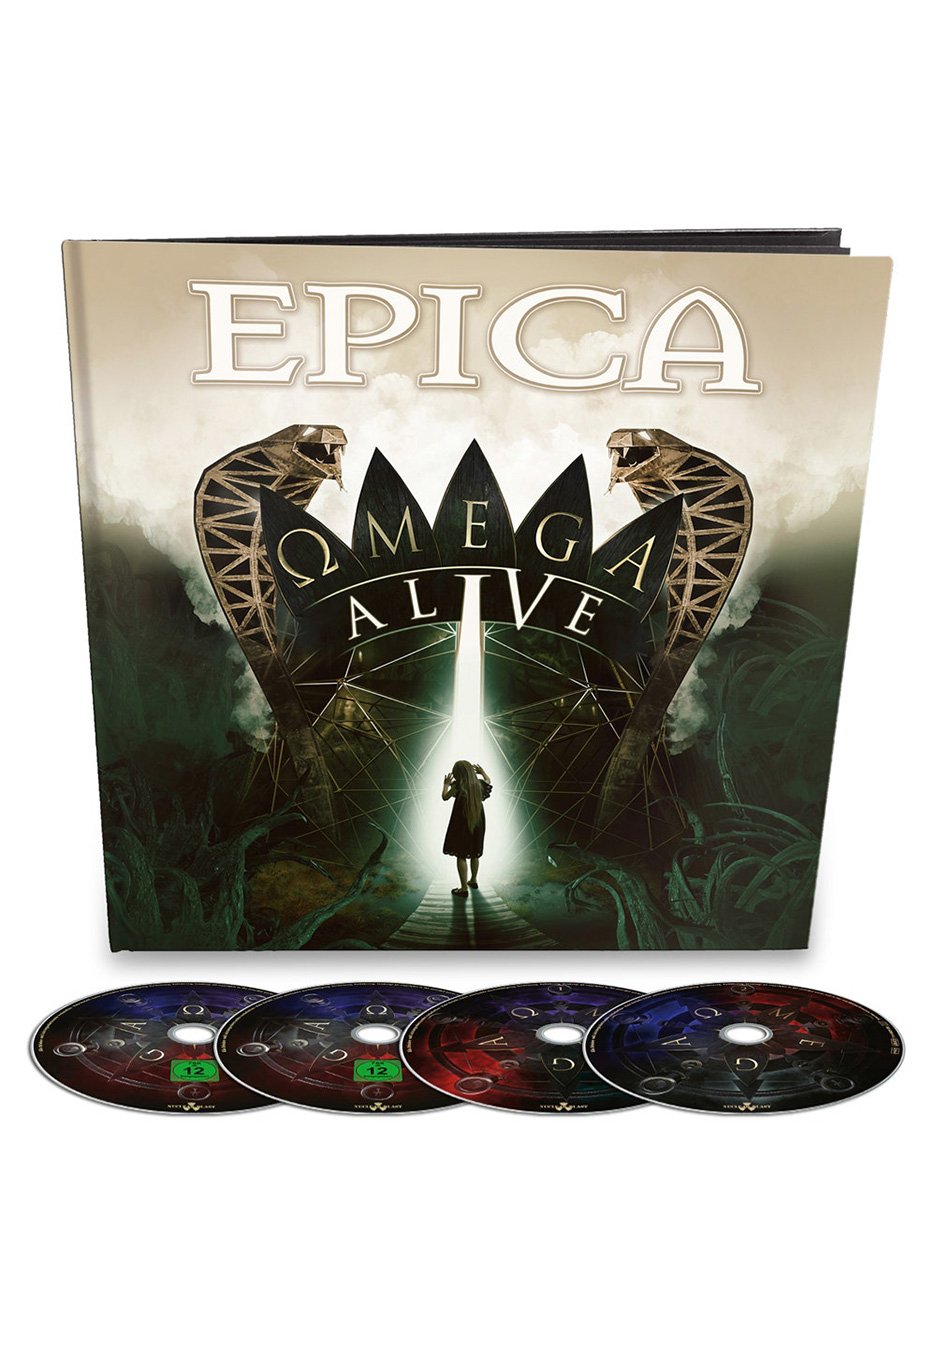 Epica - Omega Alive - Earbook